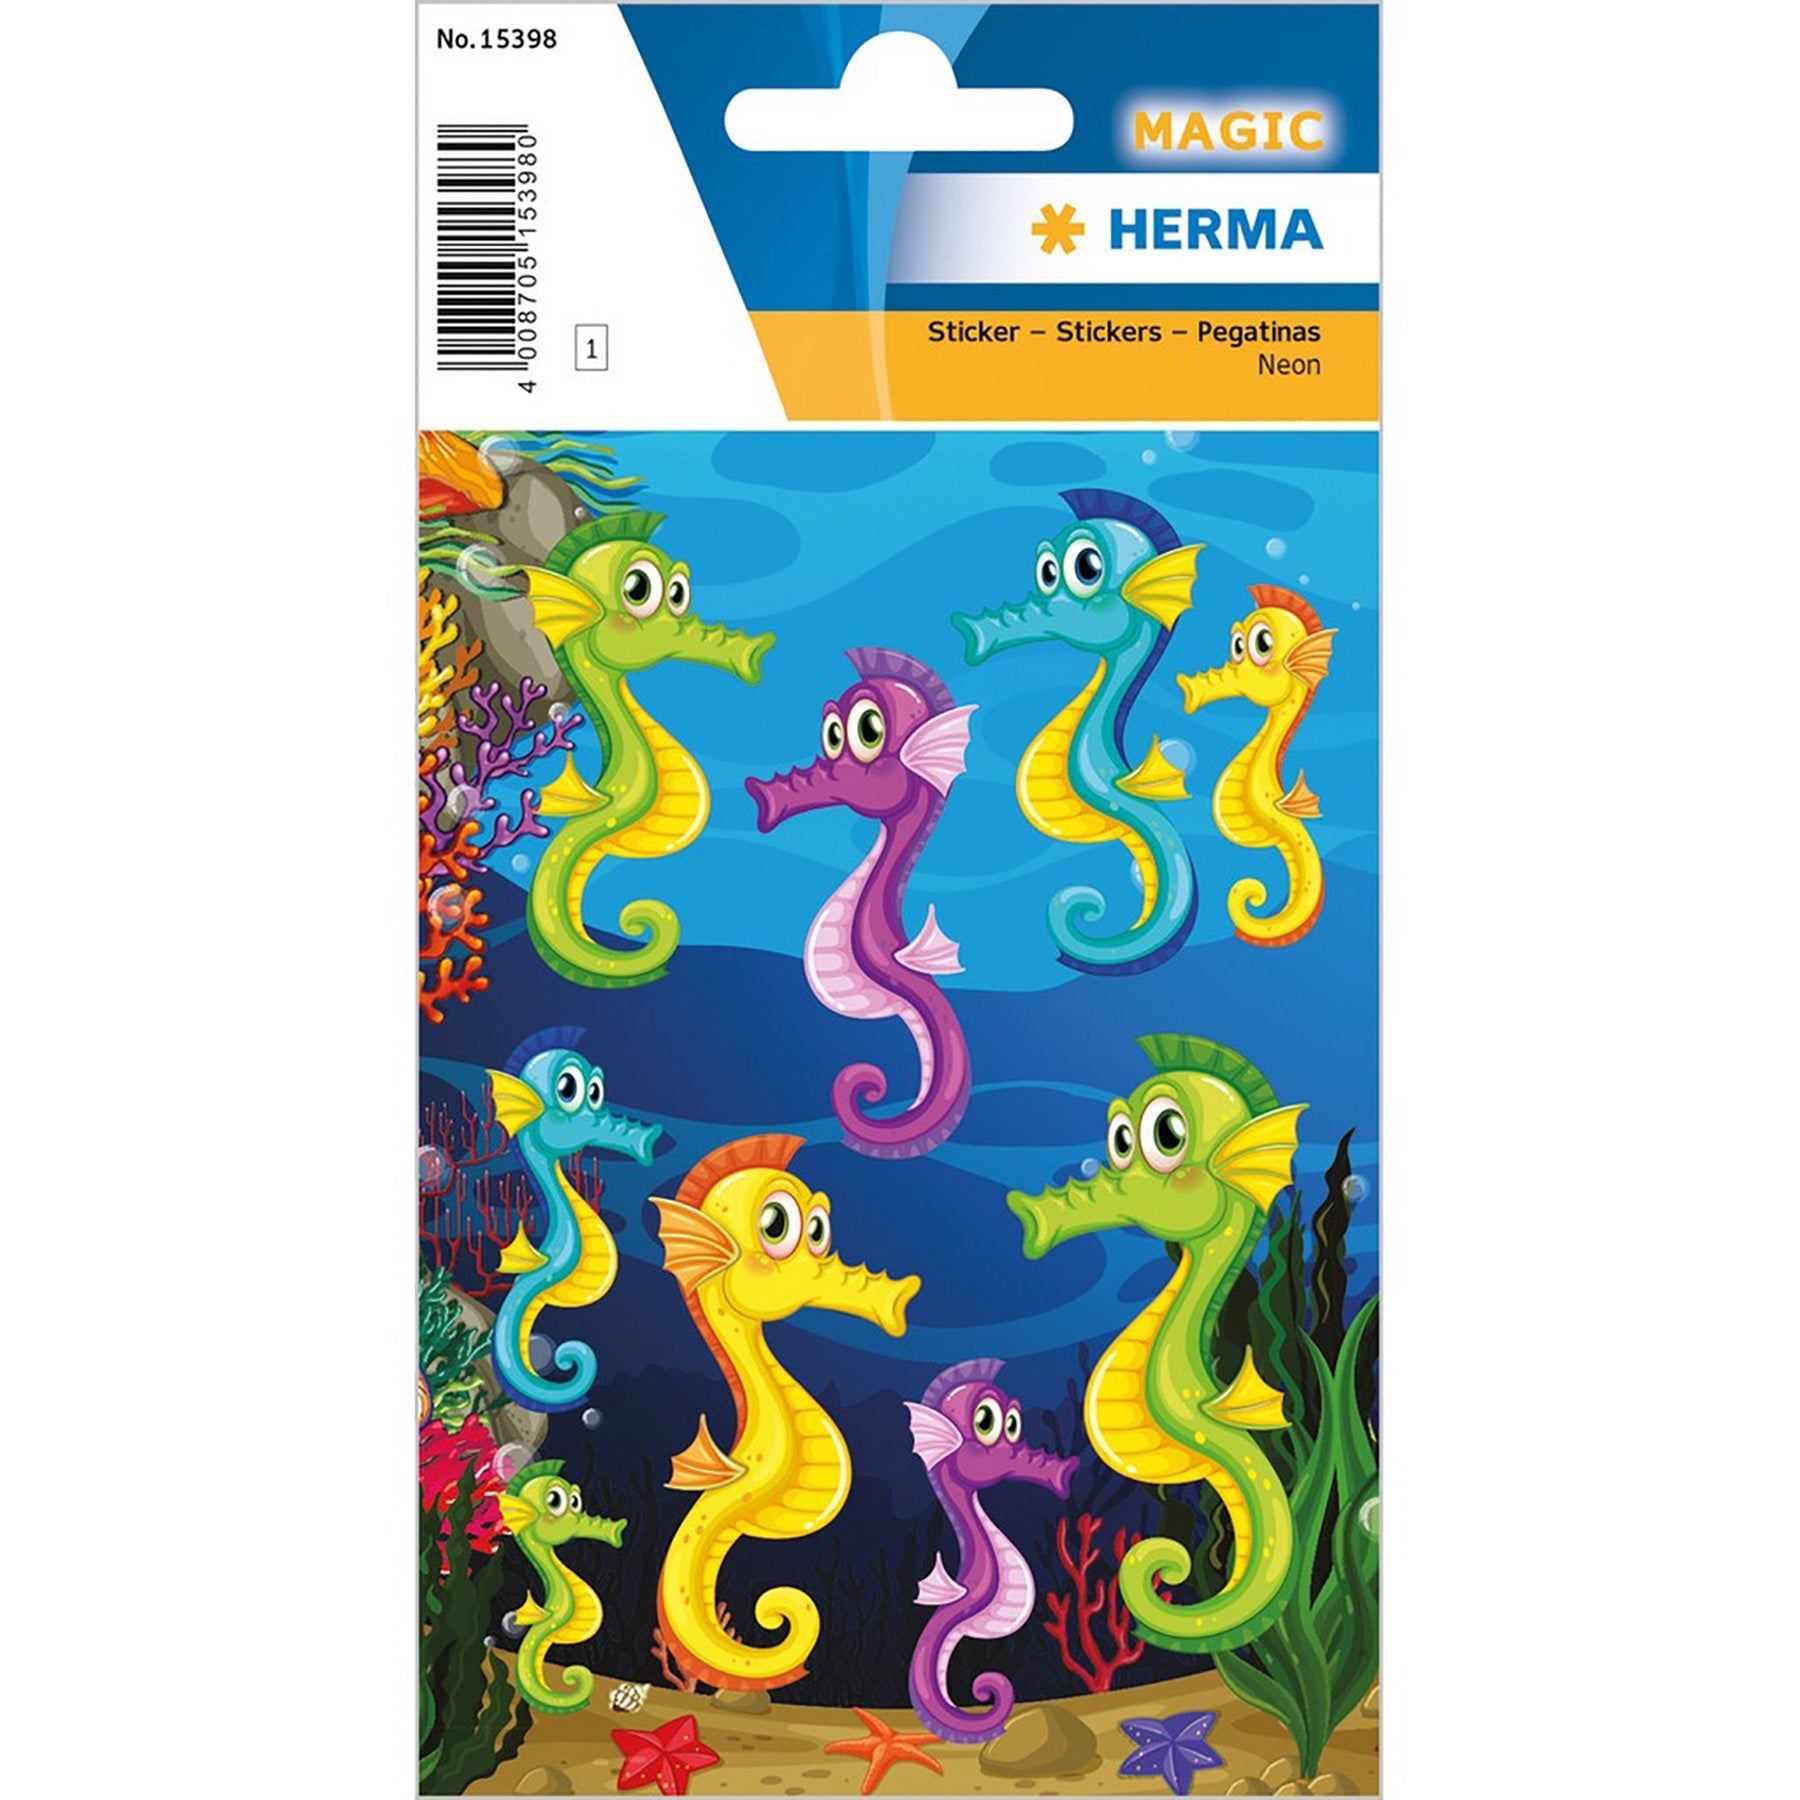 Herma Magic Stickers Seahorse Neon 4.75x3.1in Sheet